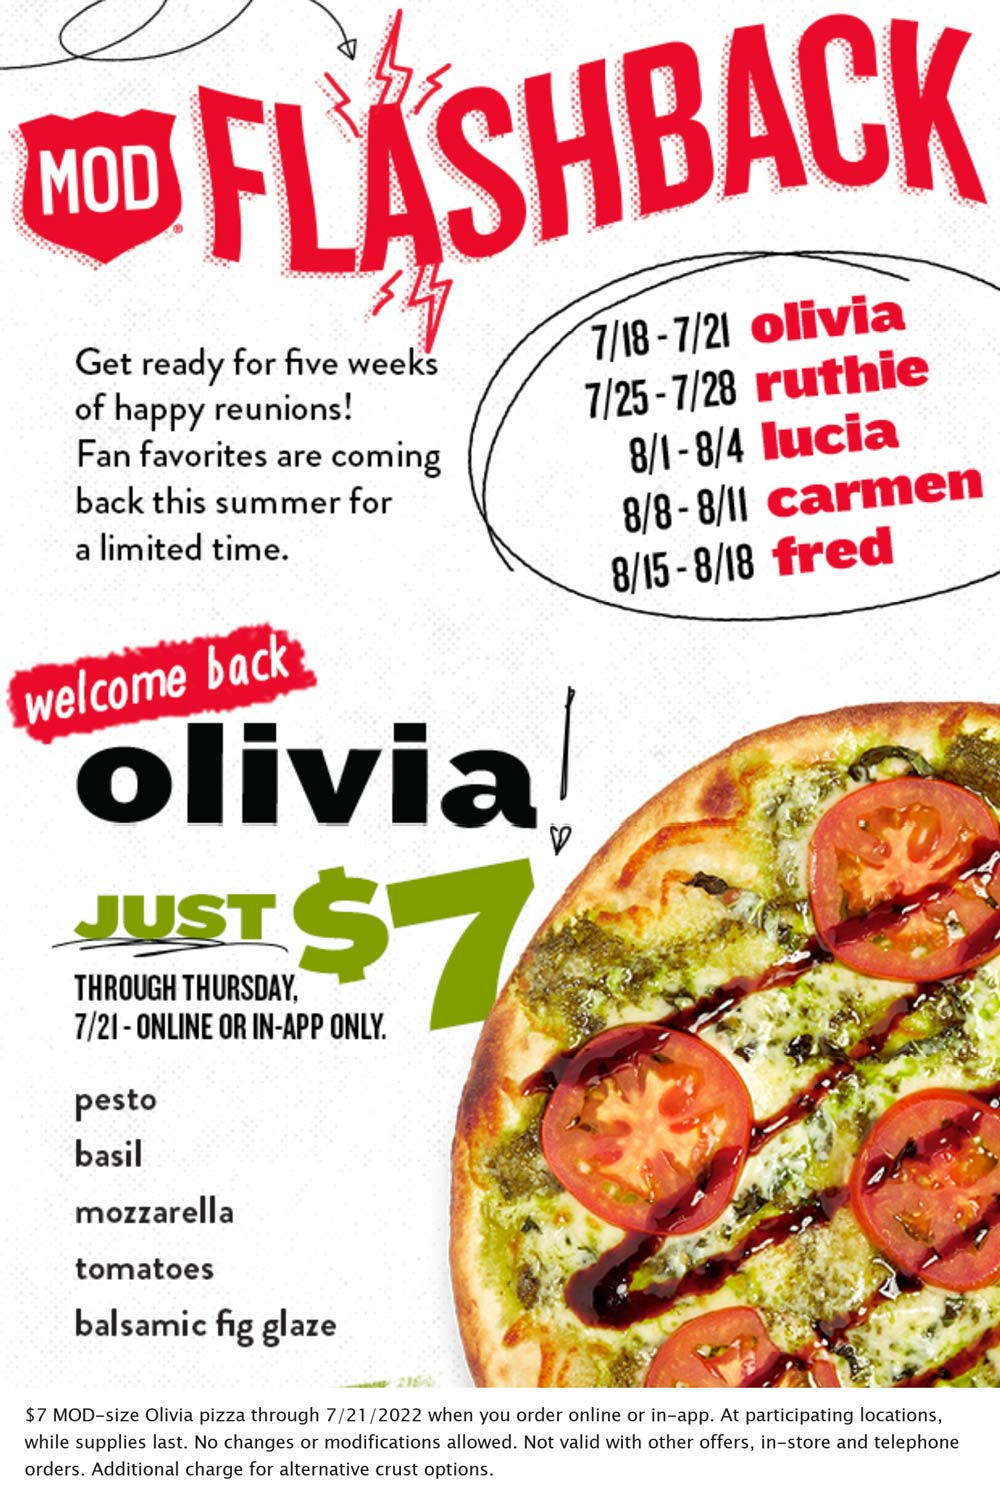 MOD restaurants Coupon  $7 throwback pizzas at MOD pizza #mod 